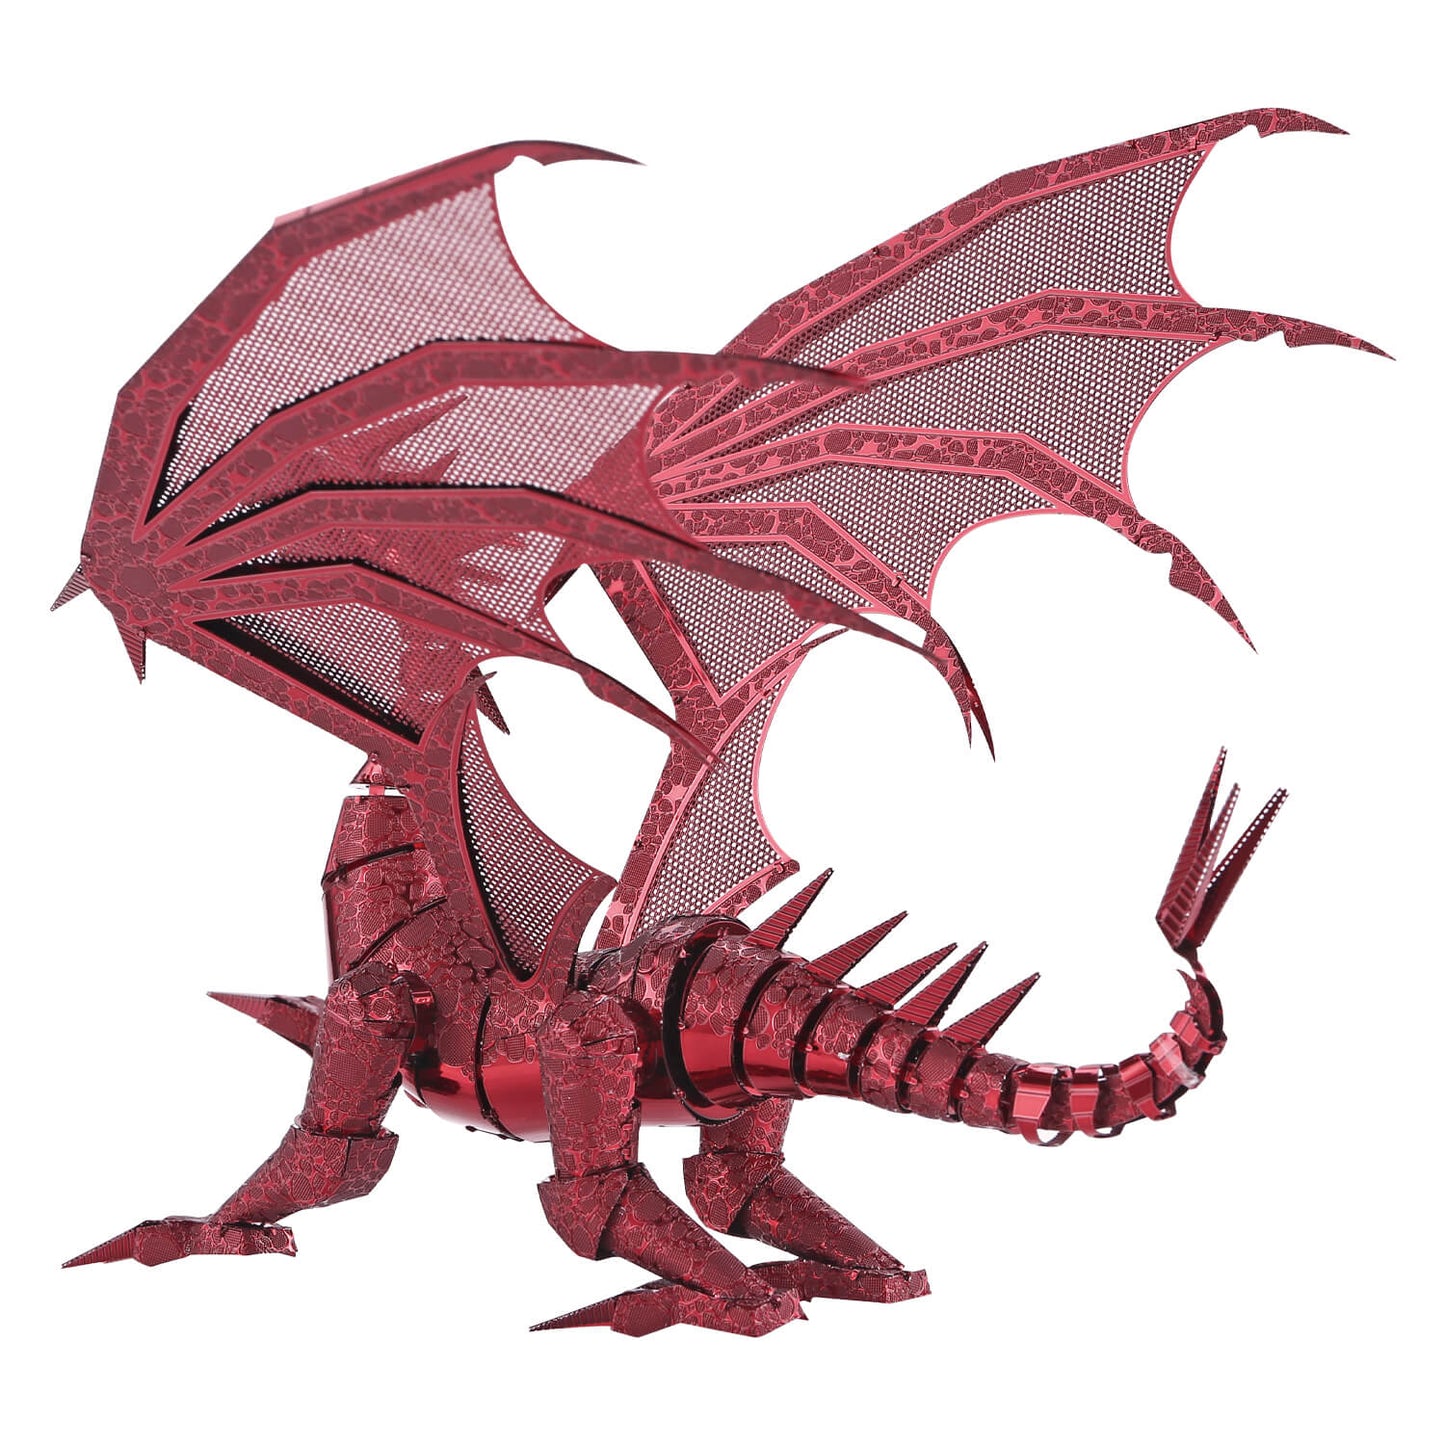 Dragon Rouge